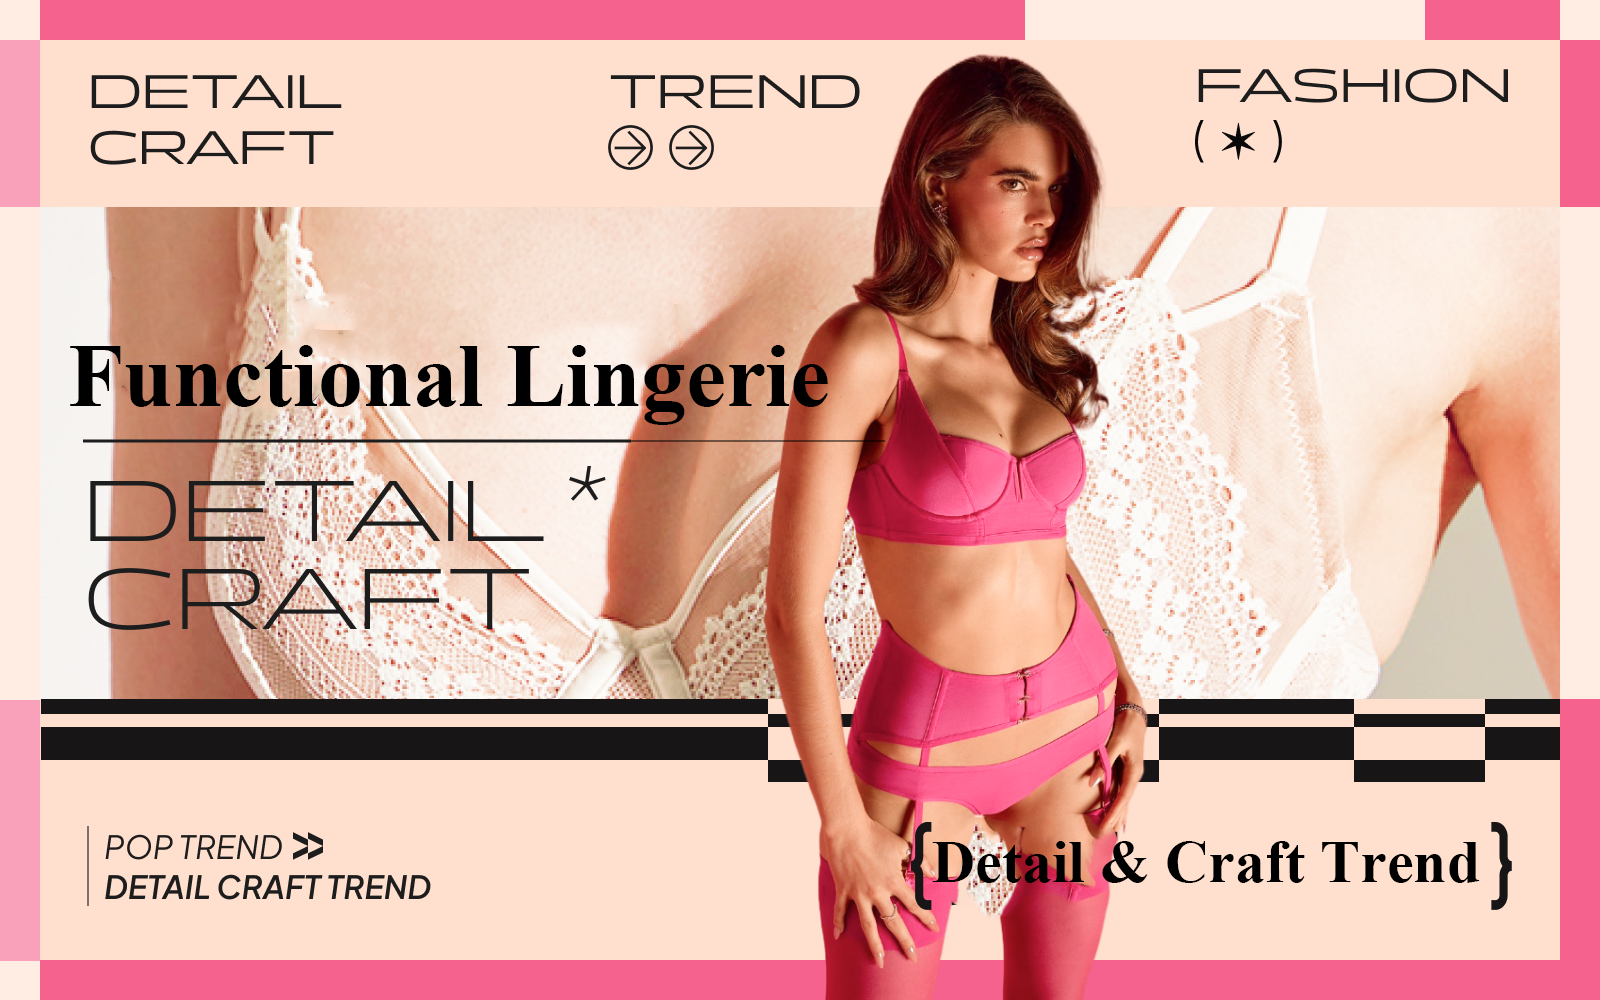 Functional Lingerie -- The Detail & Craft Trend for Women's Bra